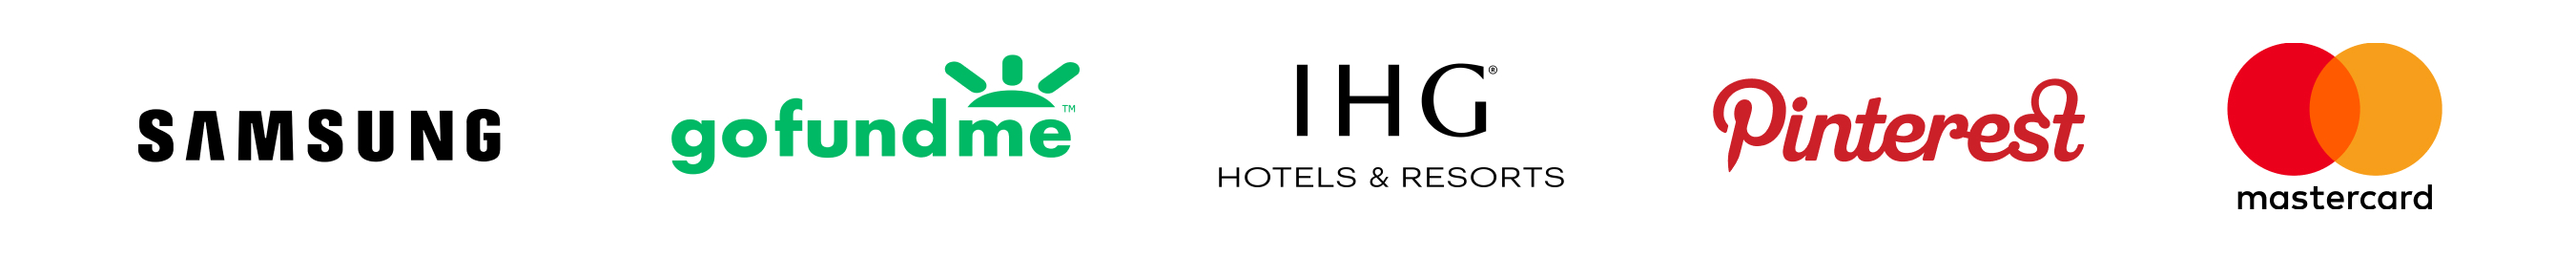 Samsung logotyp, gofundme logotyp, IGH Hotel and Resorts logotyp, Pintrest logotyp, Mastercard logotyp